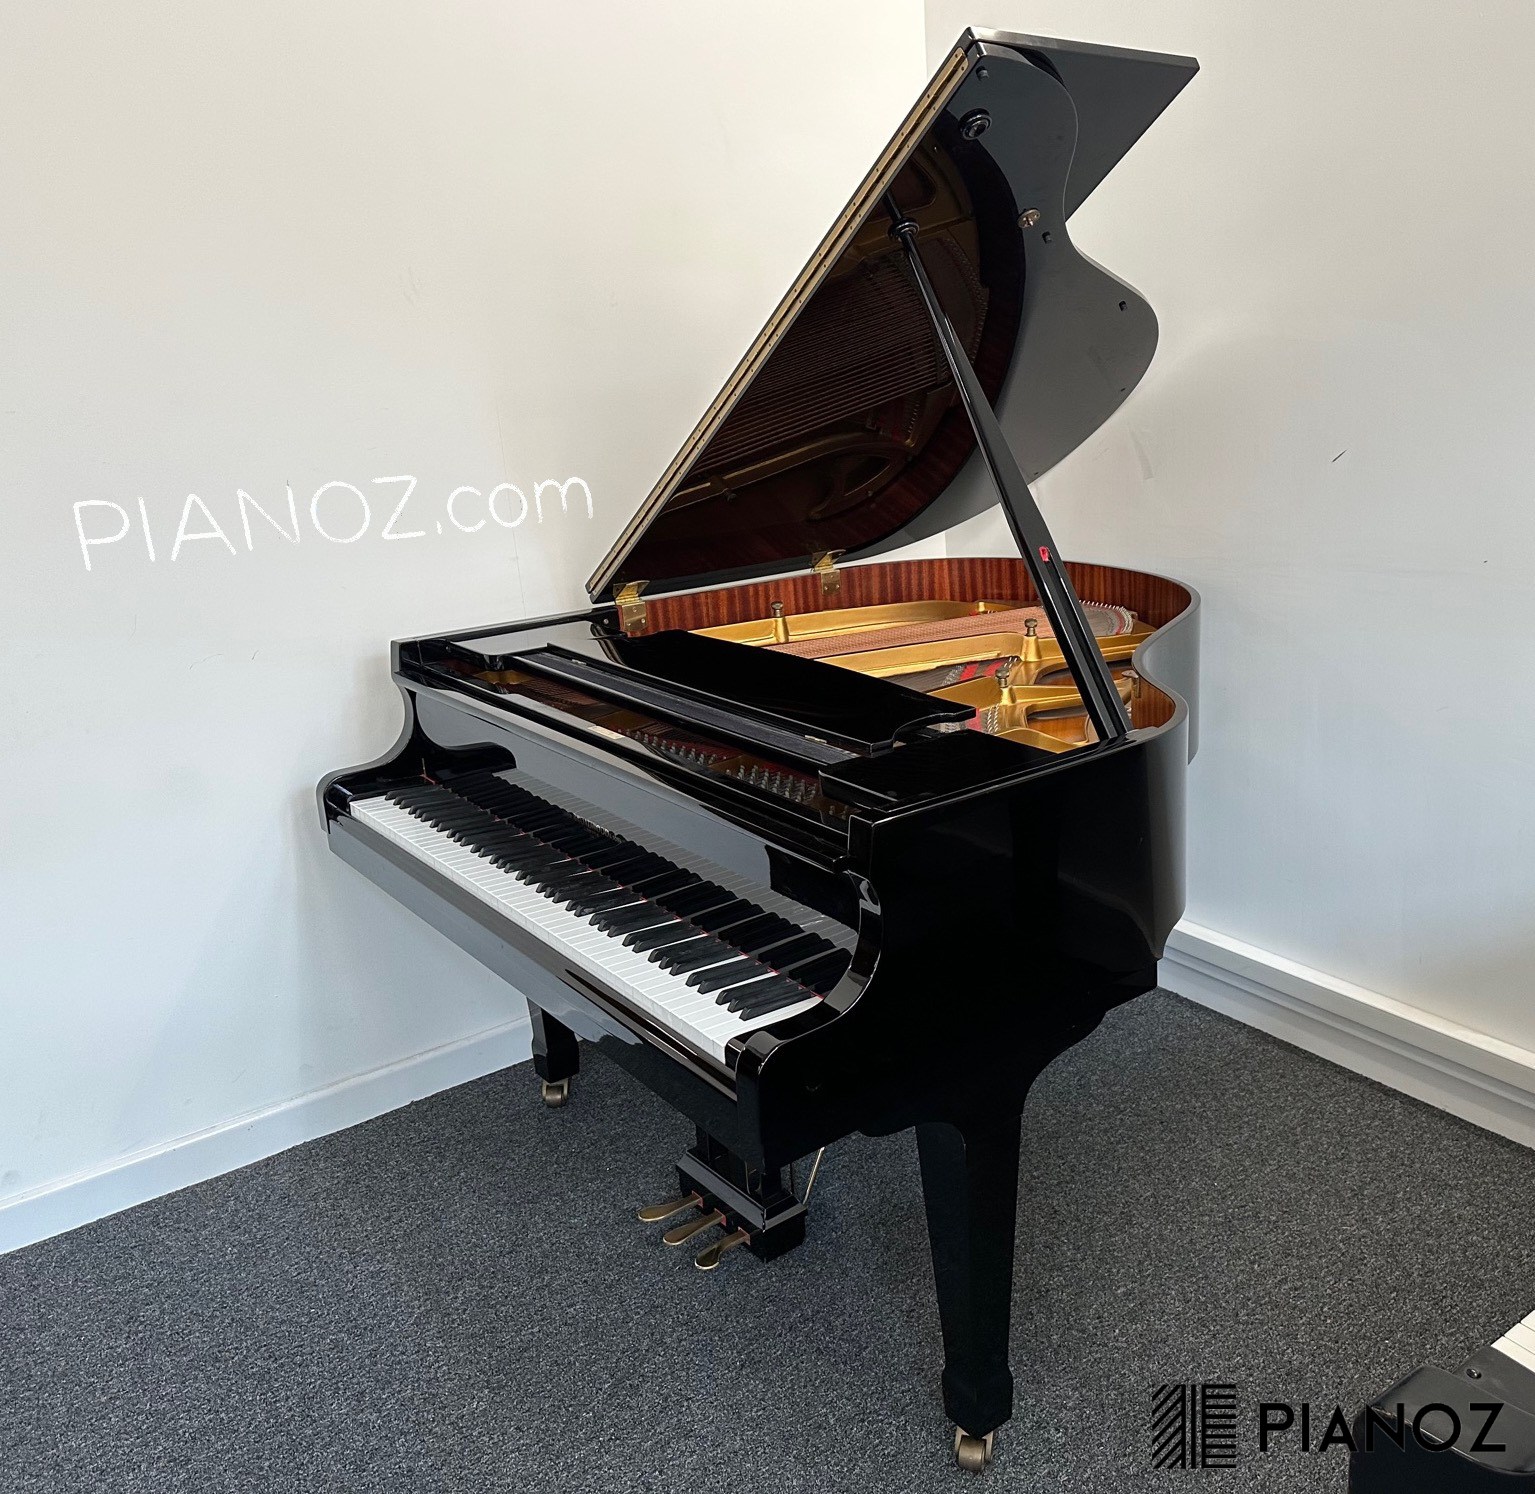 Broadwood Black Gloss Baby Grand Piano piano for sale in UK